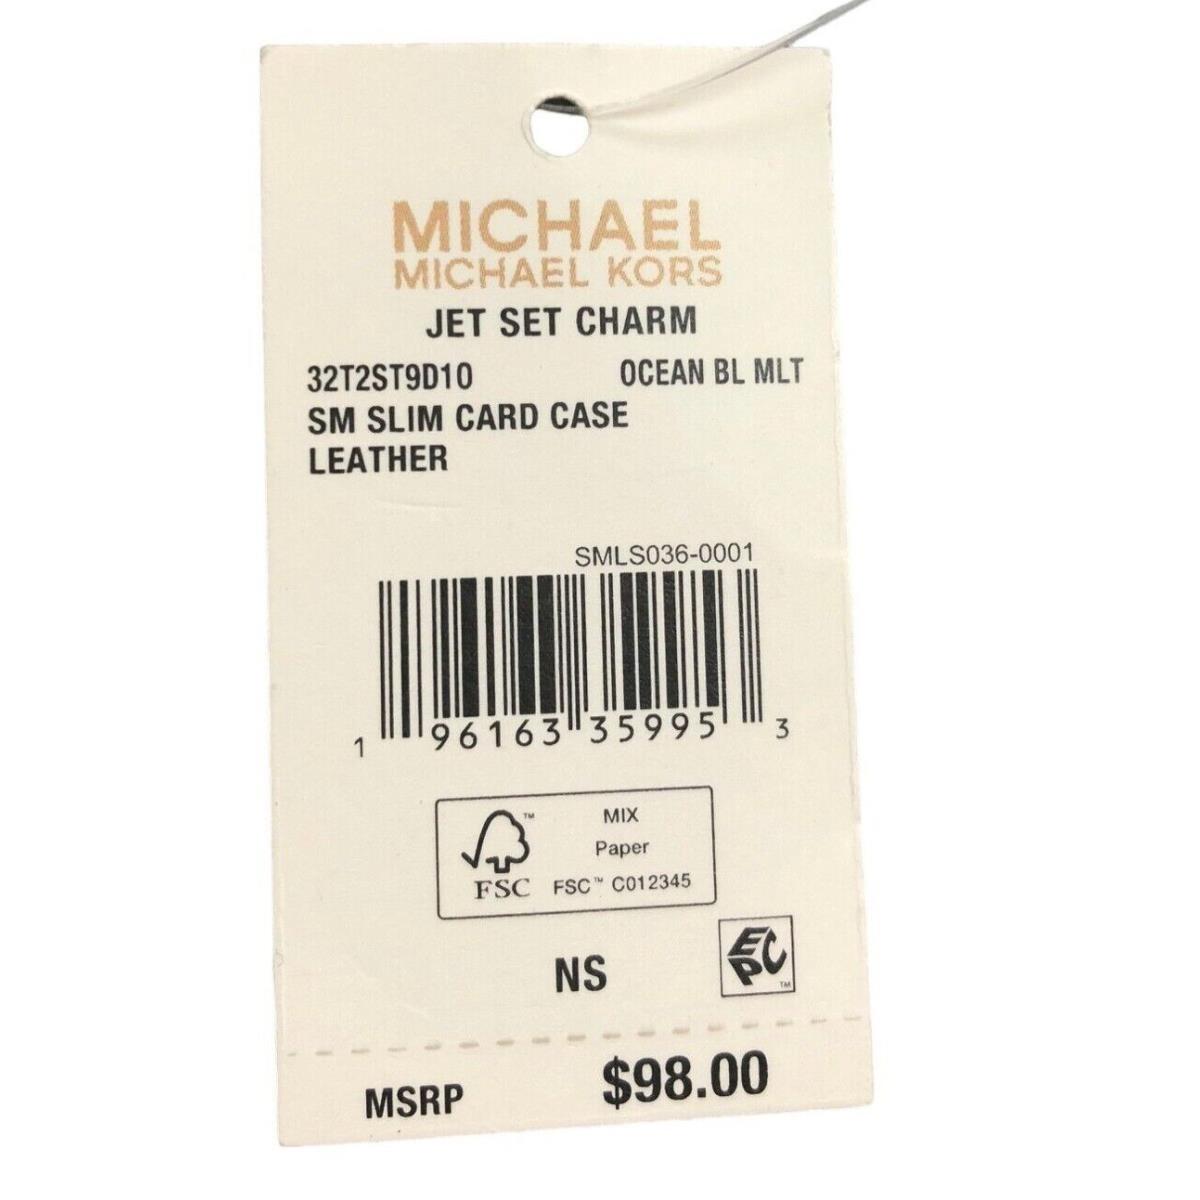 Michael Kors Jet Set Charm Small Slim Card Case